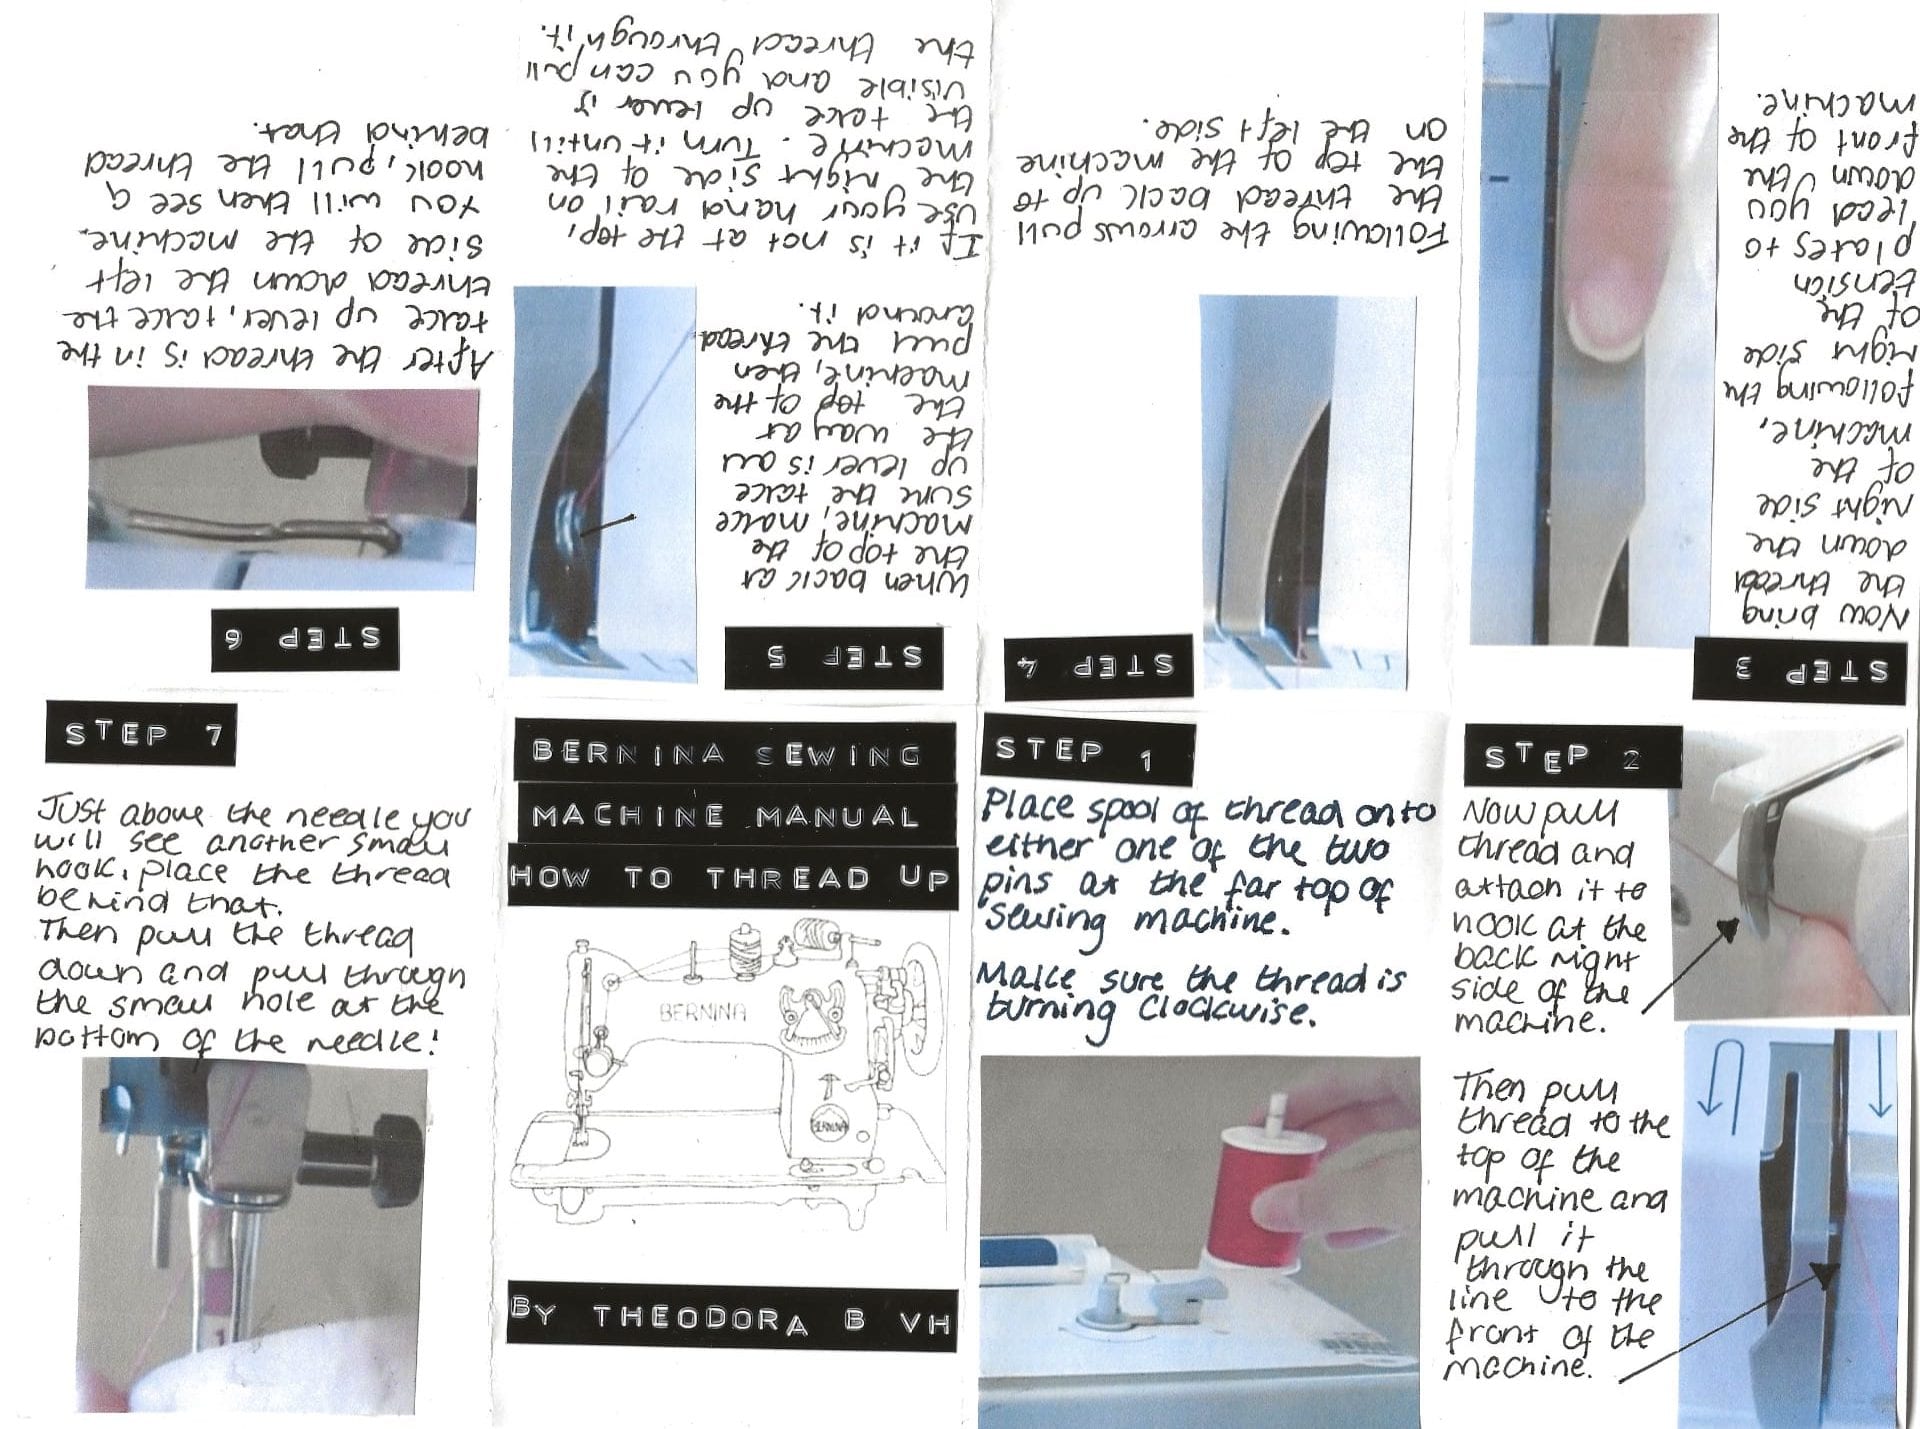 Bernina Sewing Machine Manual : How to thread up